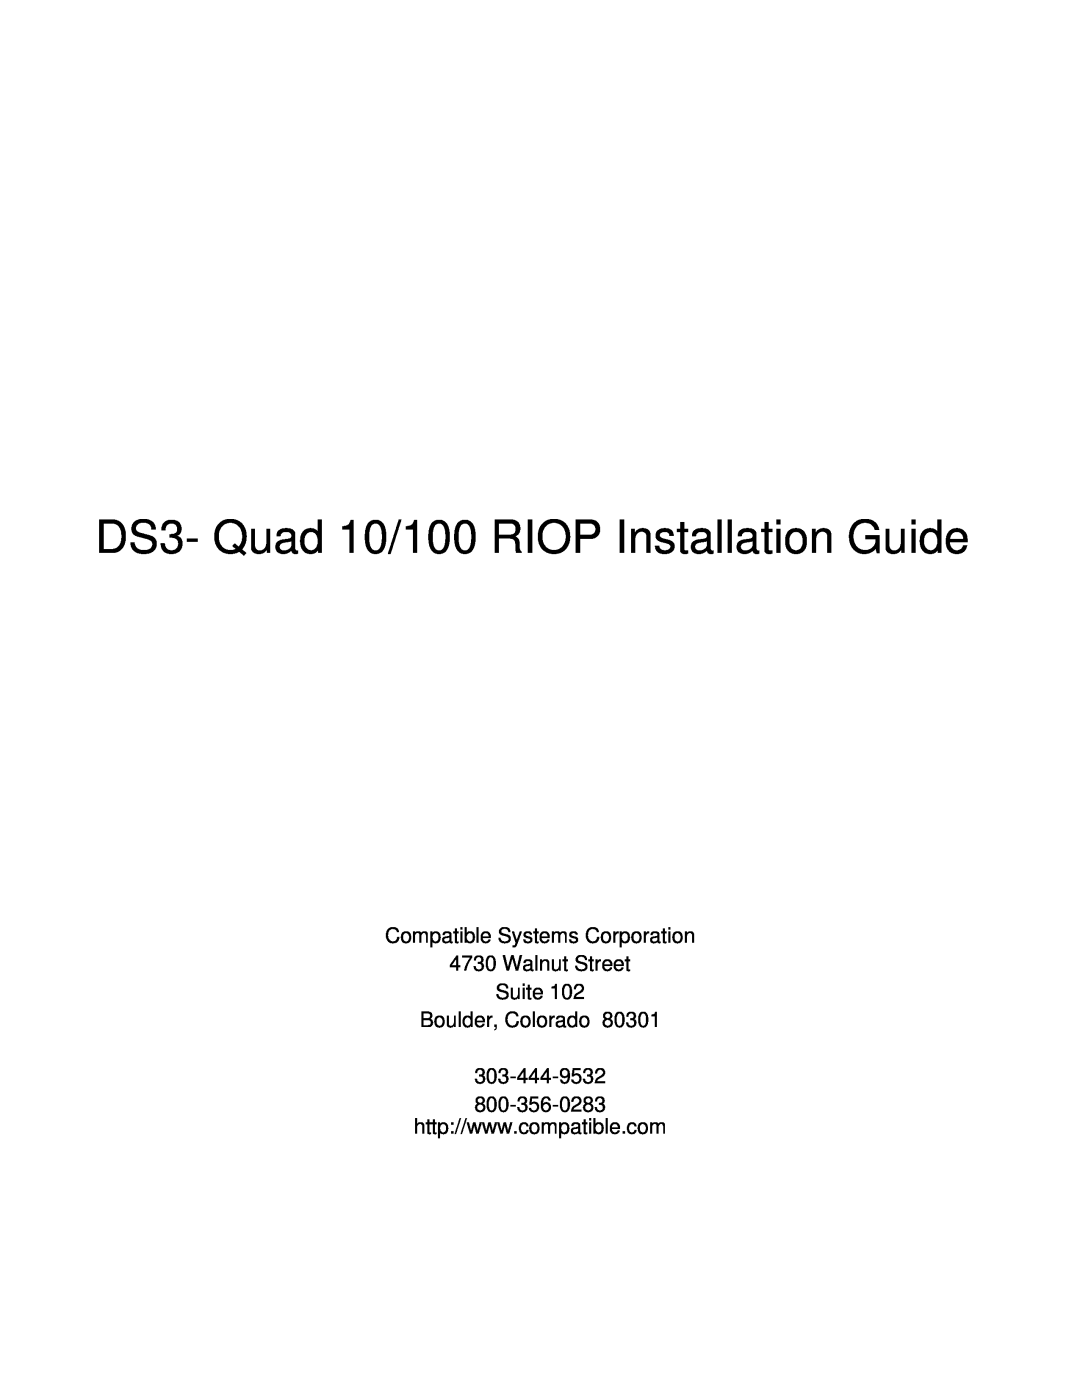 Compatible Systems manual DS3- Quad 10/100 RIOP Installation Guide, Boulder, Colorado 